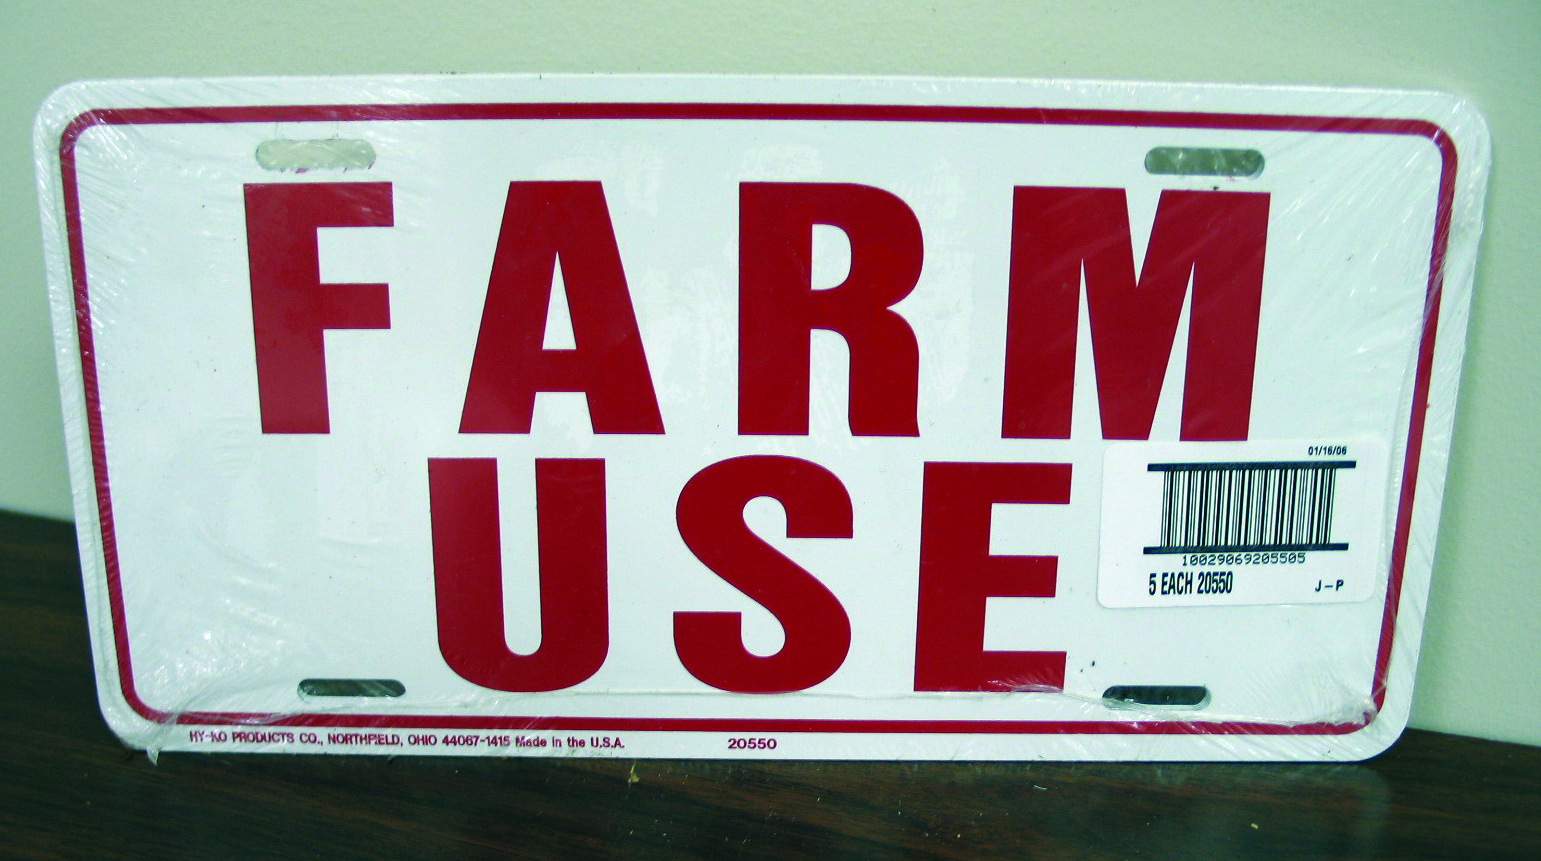 FARM USE ID TAG    WHITE      5